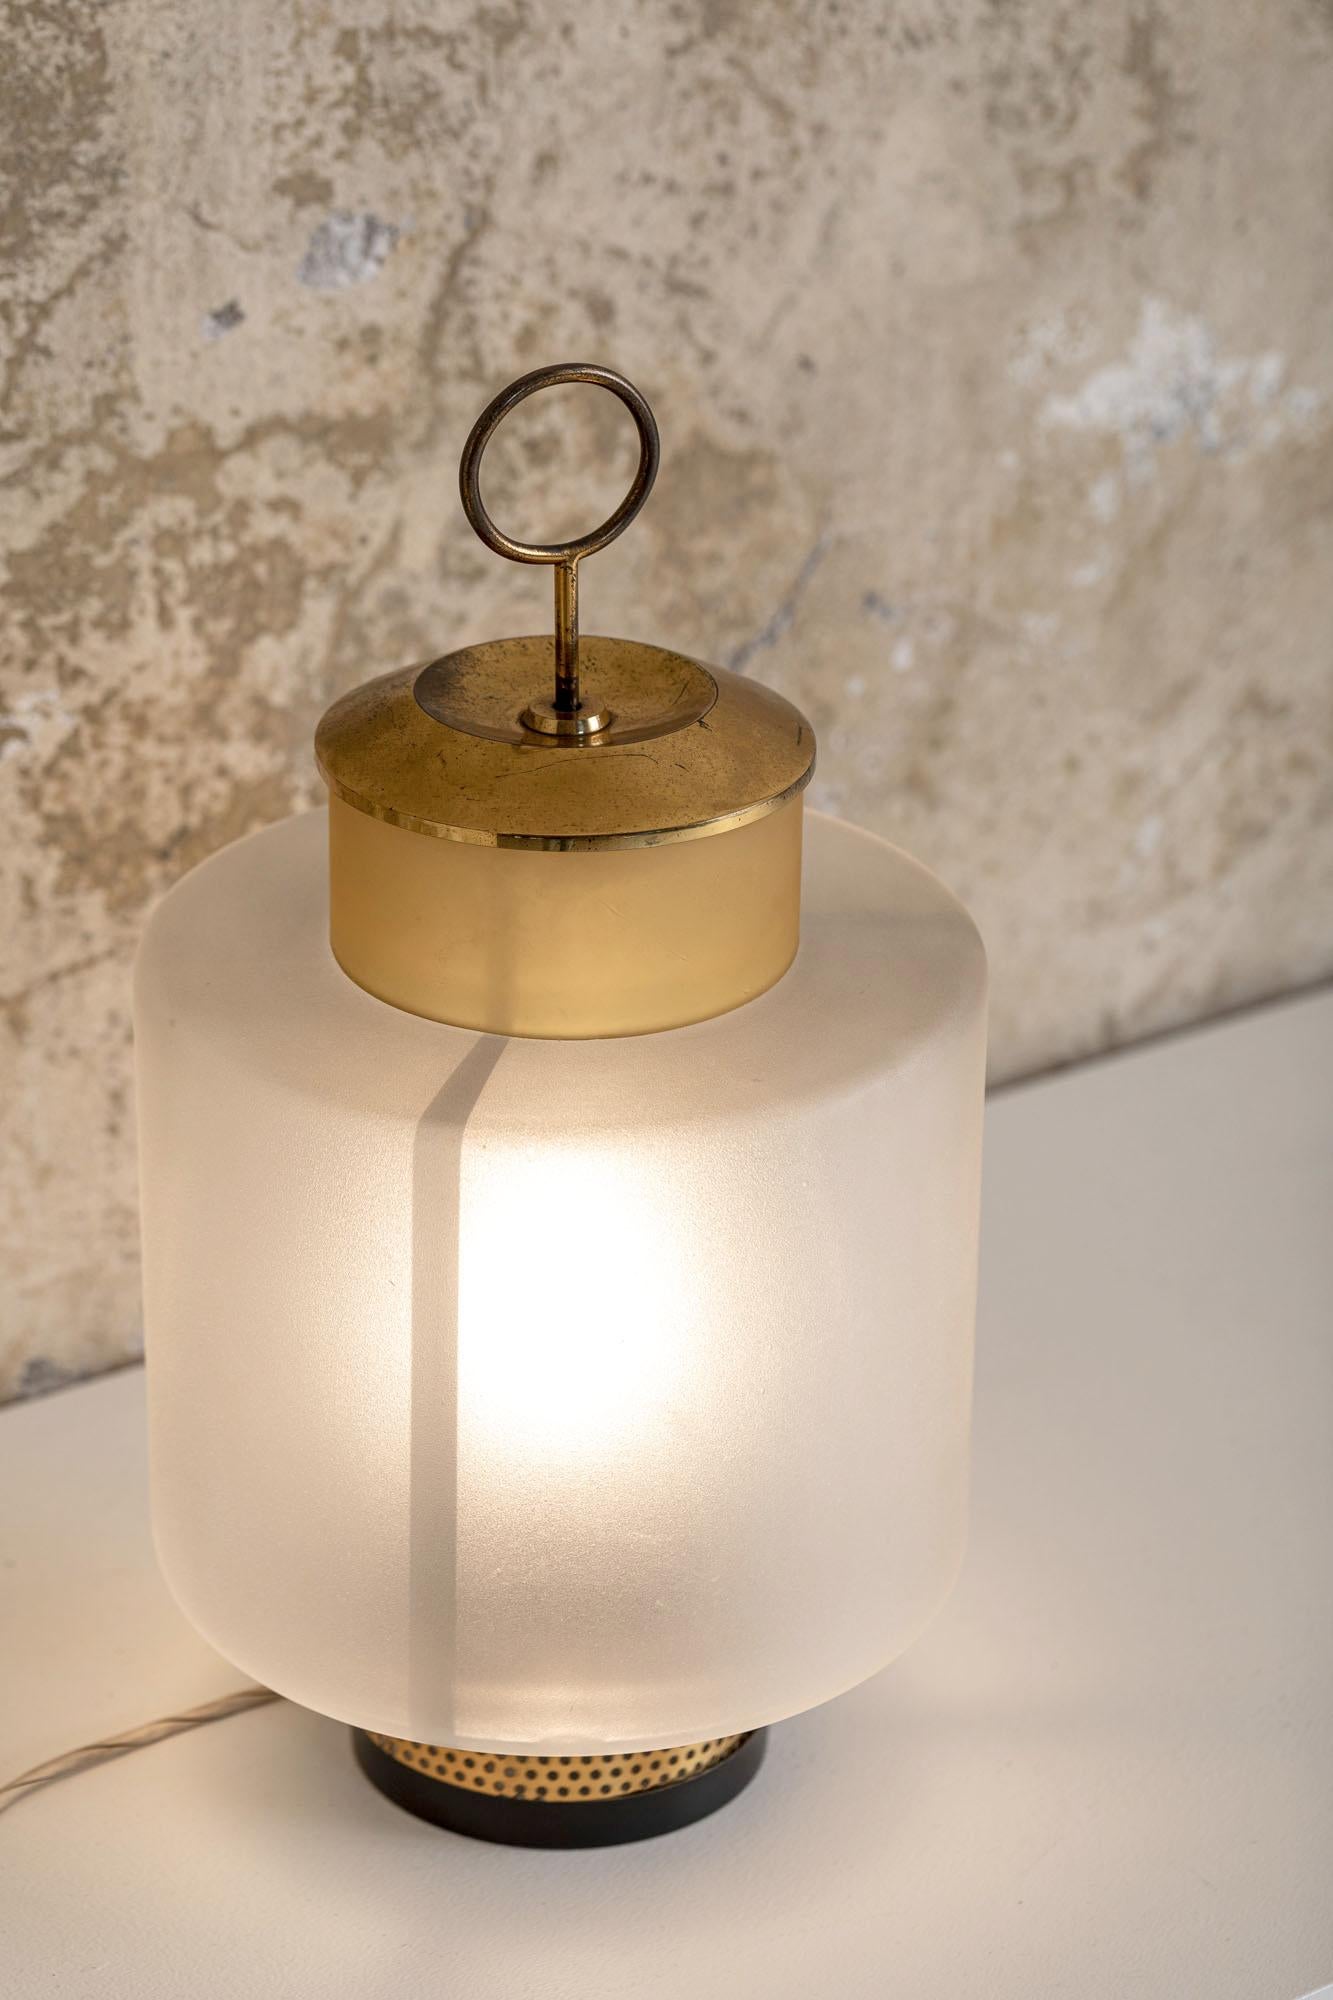 Rare glass and brass table lamp by Stilnovo.
Charming and elegant lantern. Original label.
Model 8052 published on Stilnovo by Luminaires- moderniste.